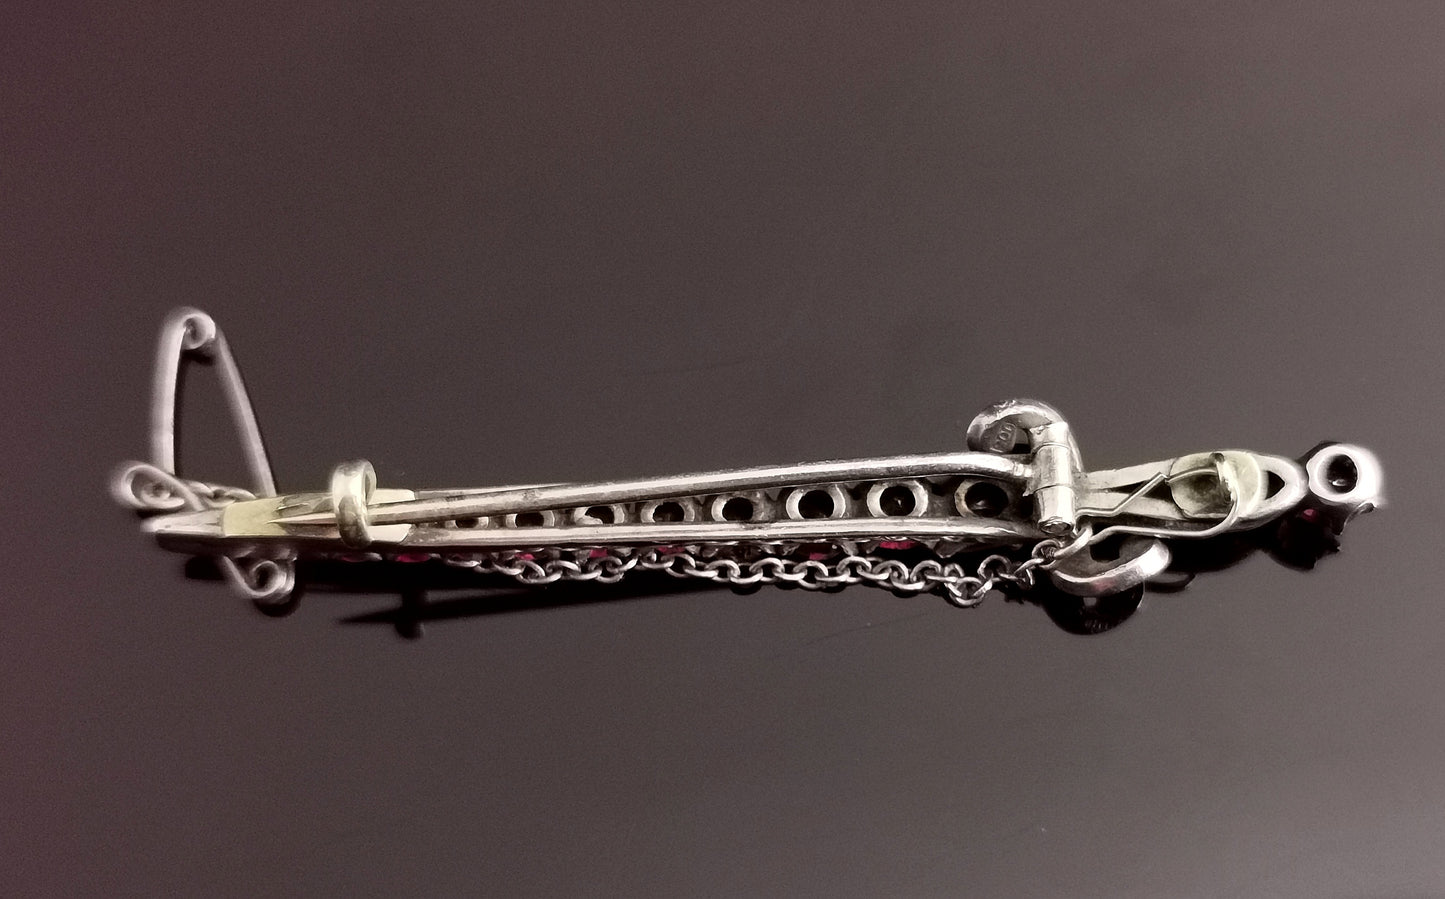 Antique French Garnet sword brooch, silver, 19th century